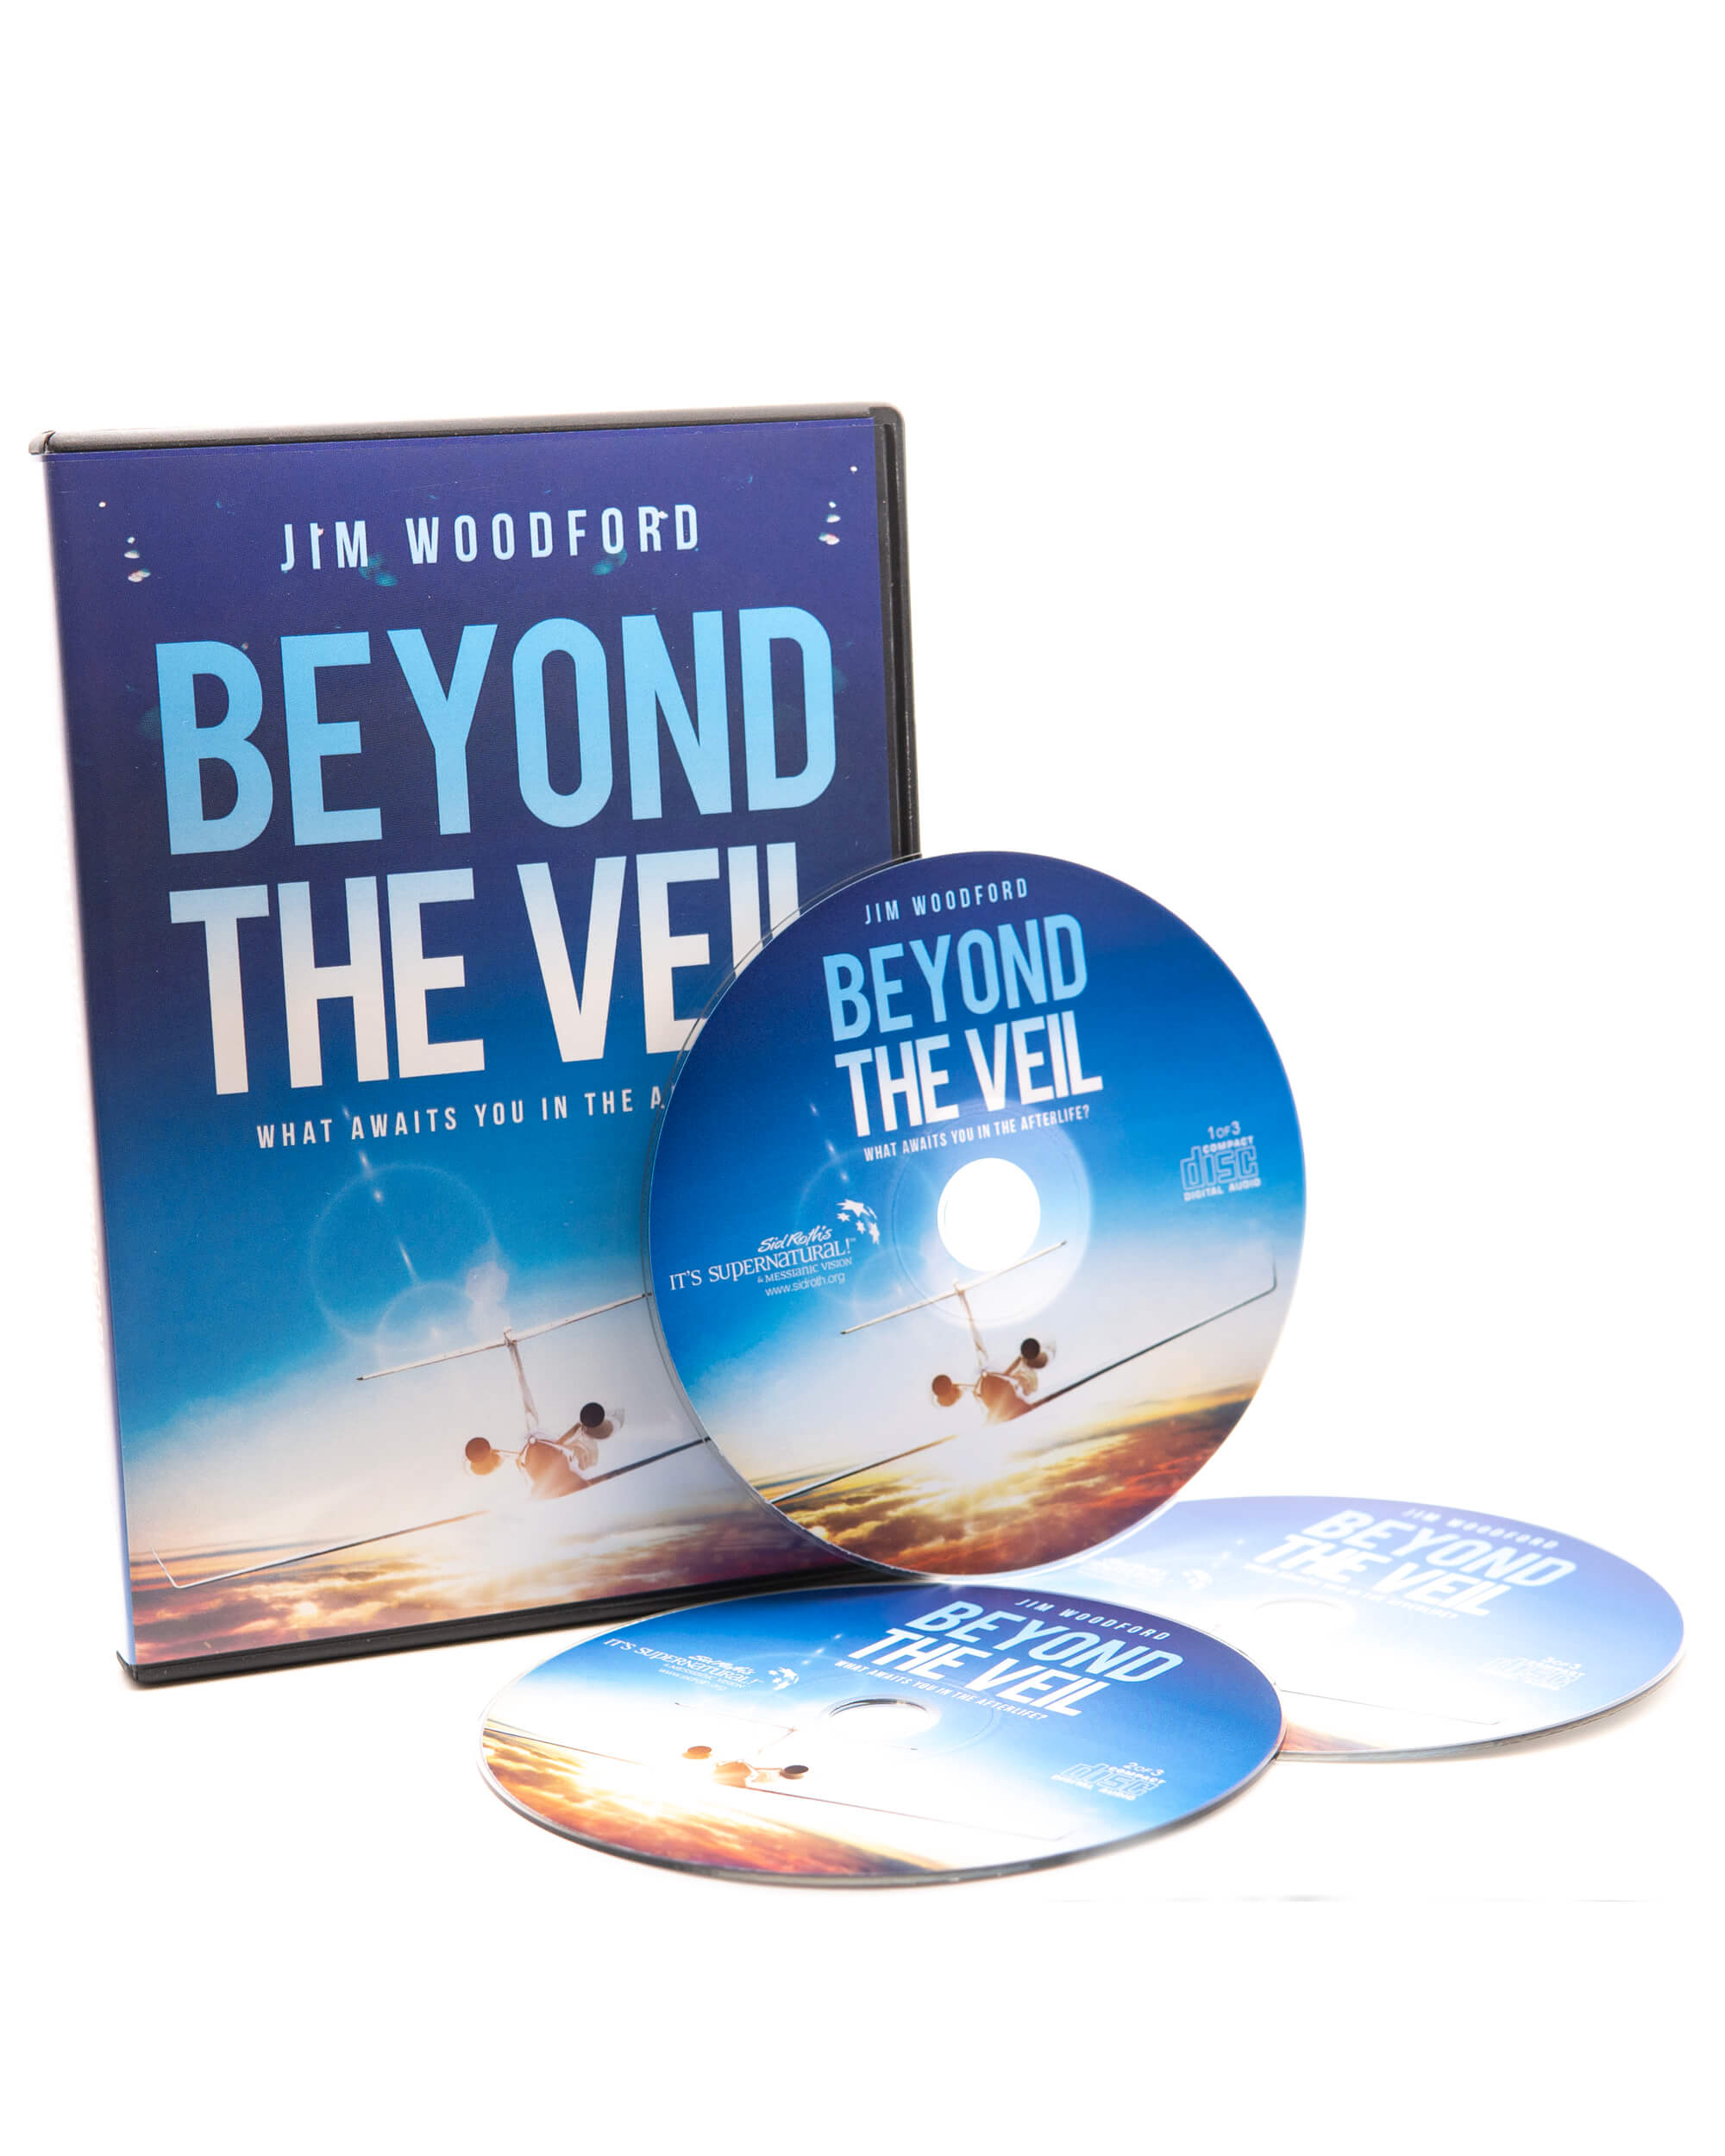 Beyond the Veil (3-CD/Audio Series) by Jim Woodford; Code: 3839